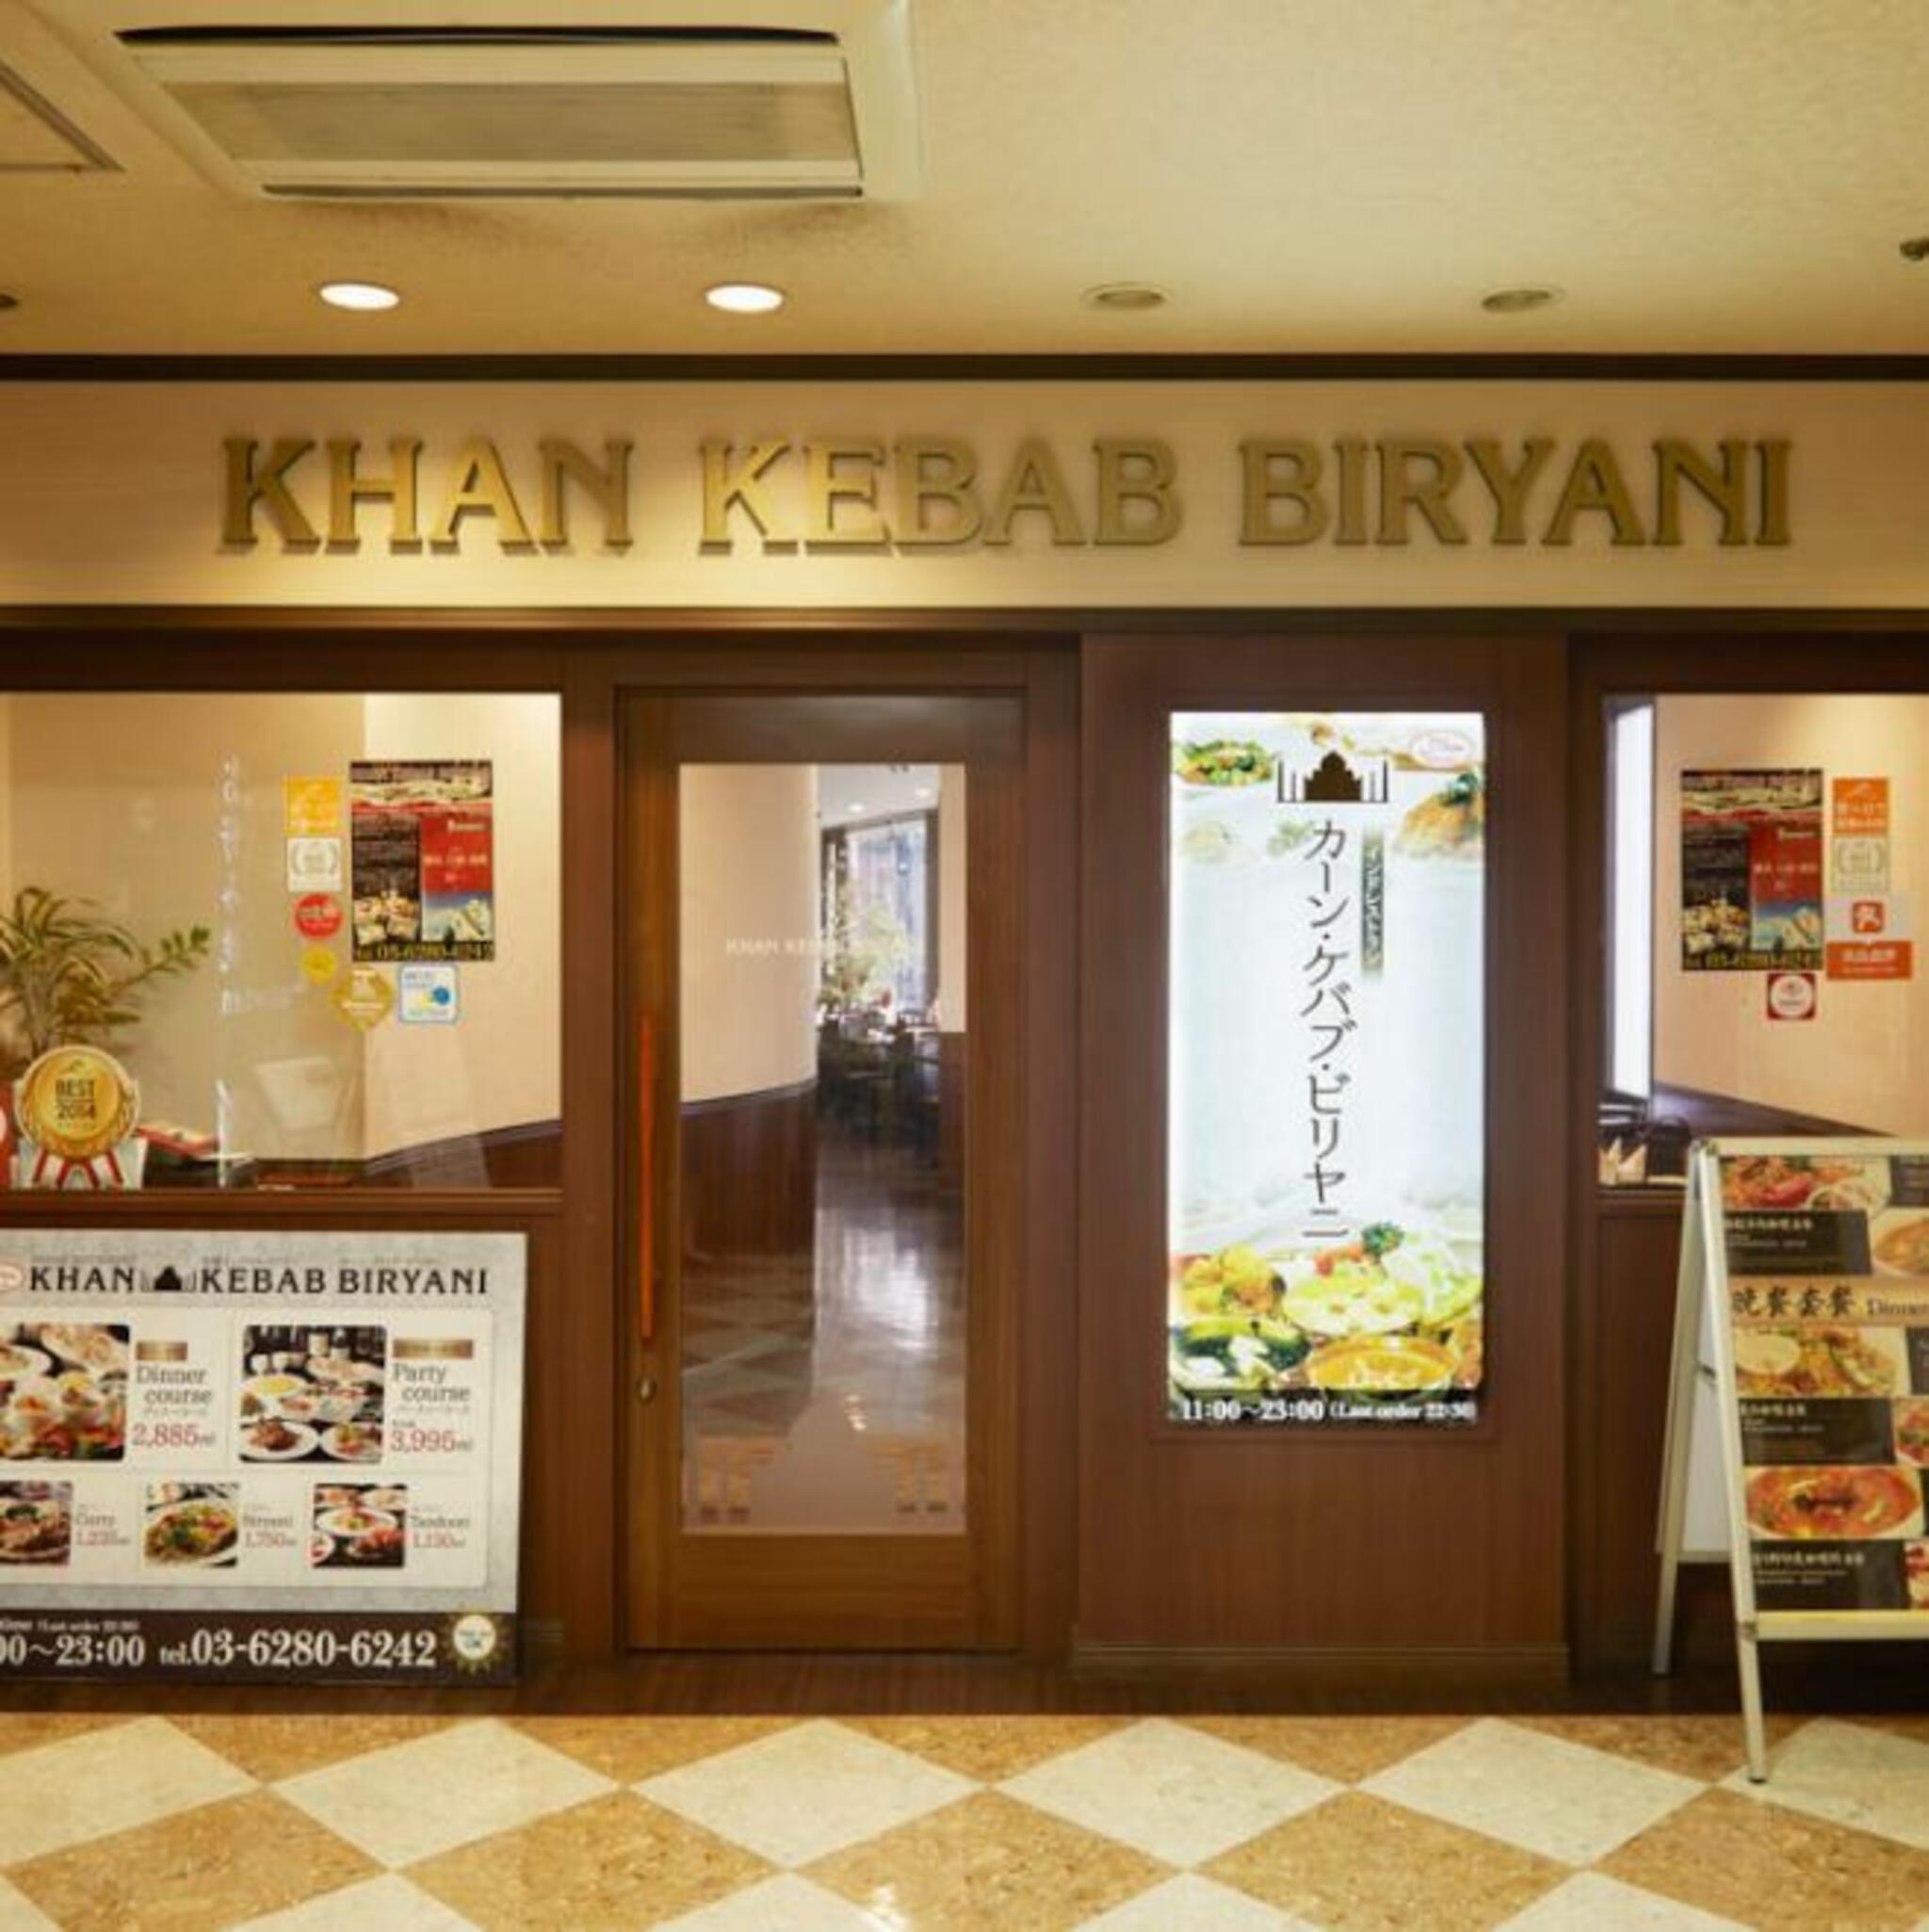 Indian RESTAURANT KHAN KEBAB BIRYANI 銀座店の代表写真9